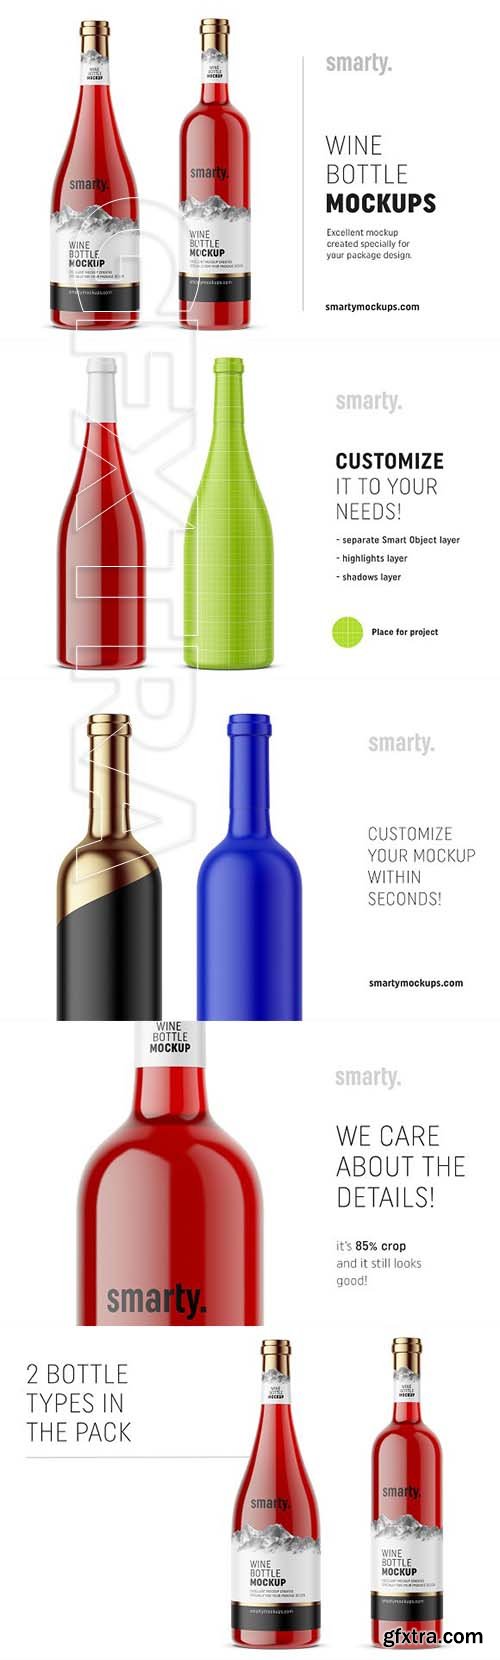 CreativeMarket - Red wine bottle mockups 3342906